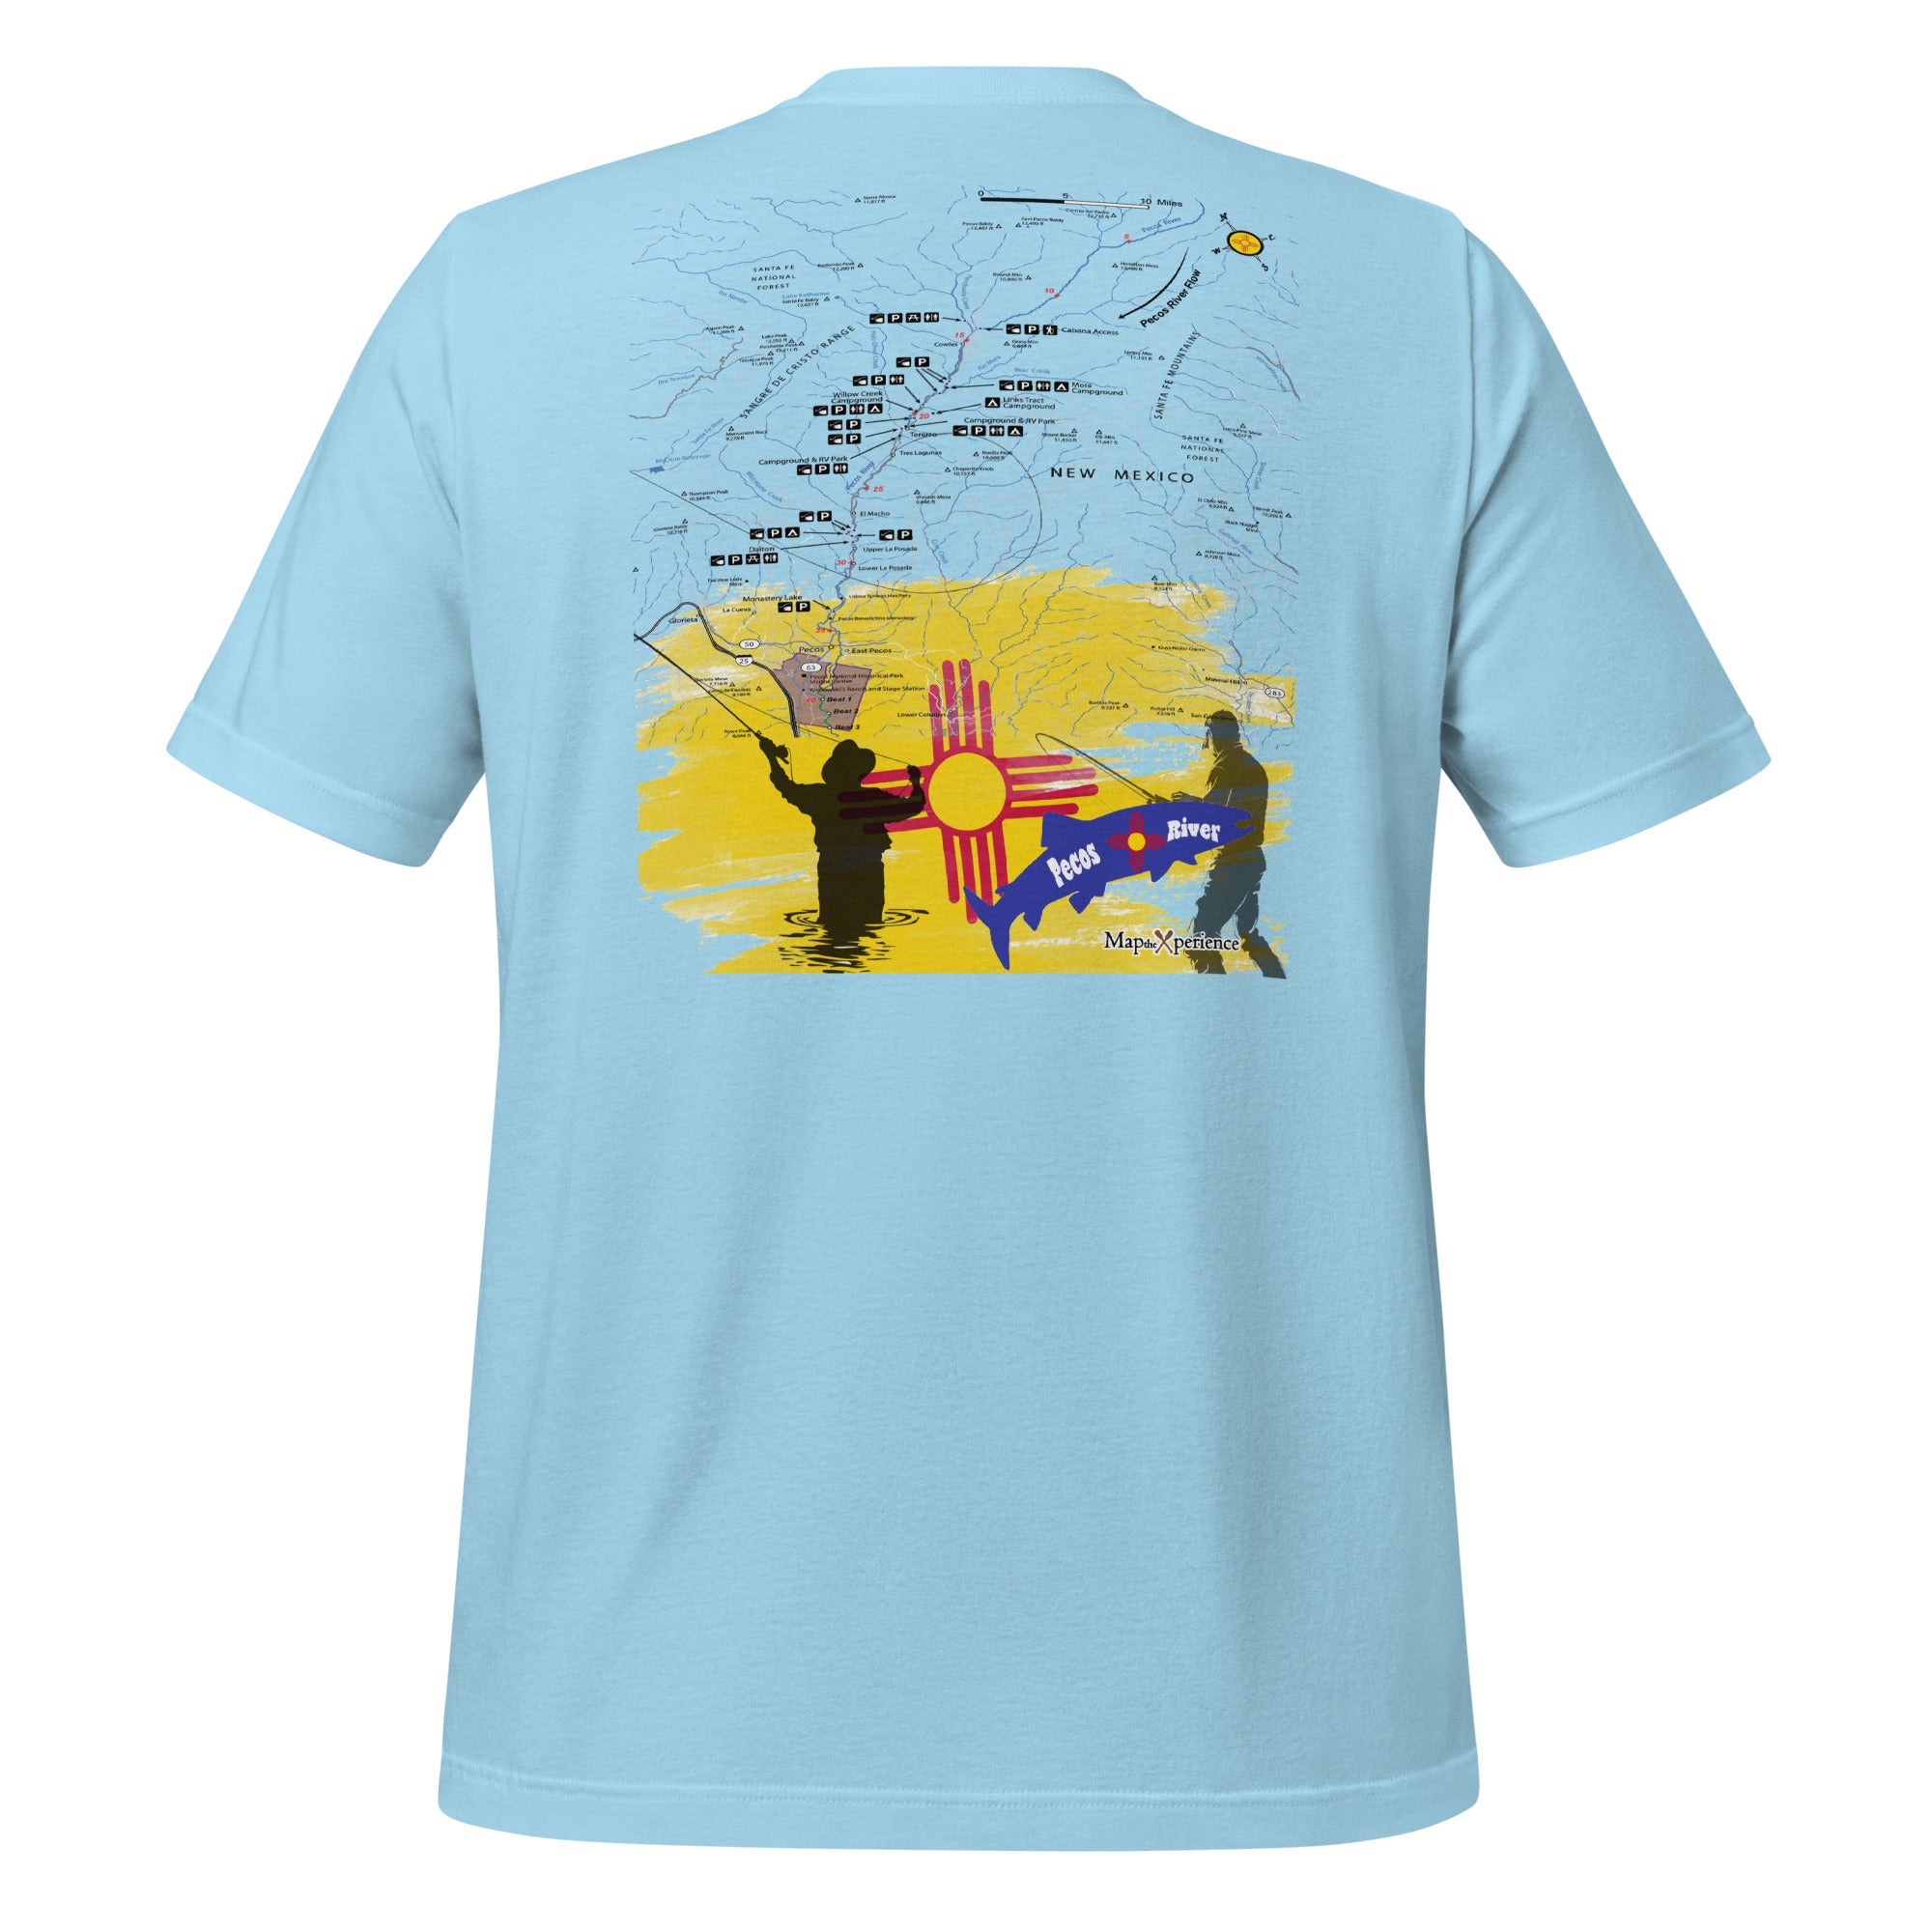 Pecos River Upper, New Mexico Performance t-shirt